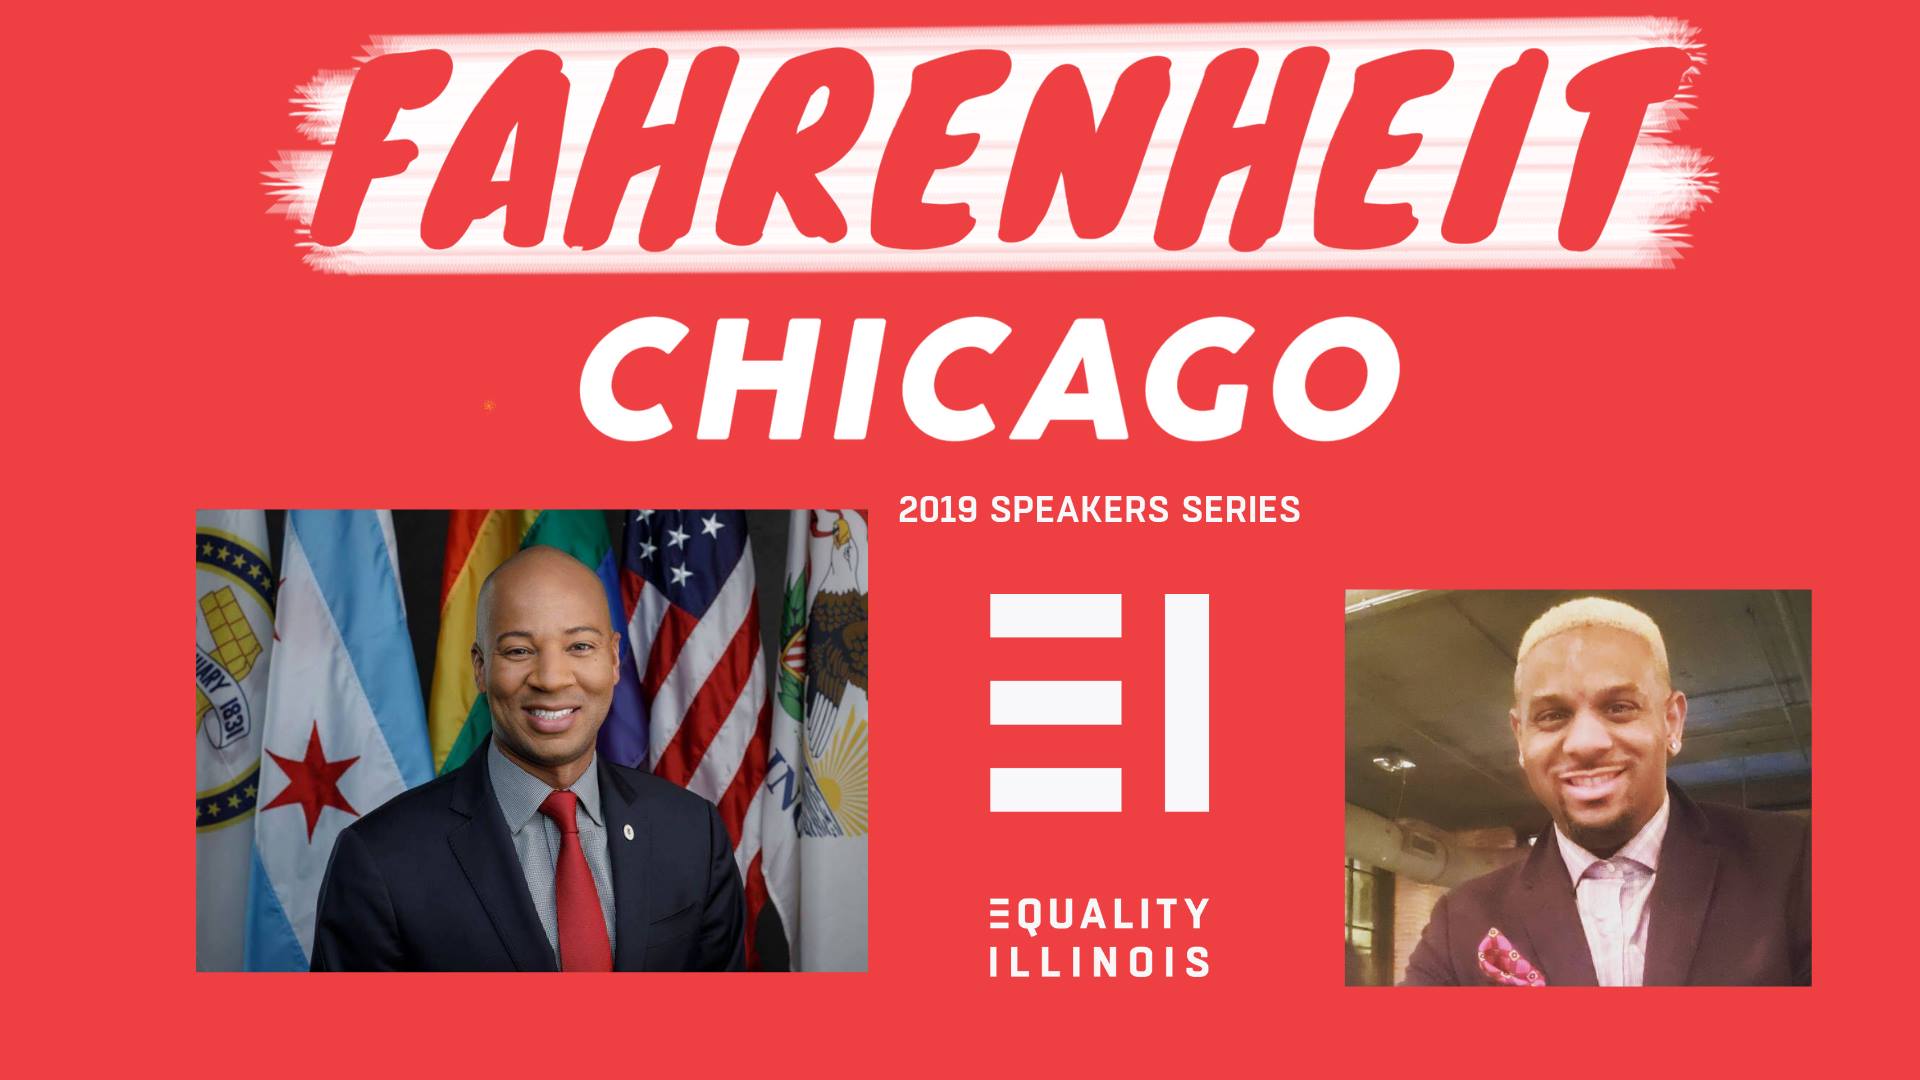 Fahrenheit Chicago Speaker Series Equality Illinois